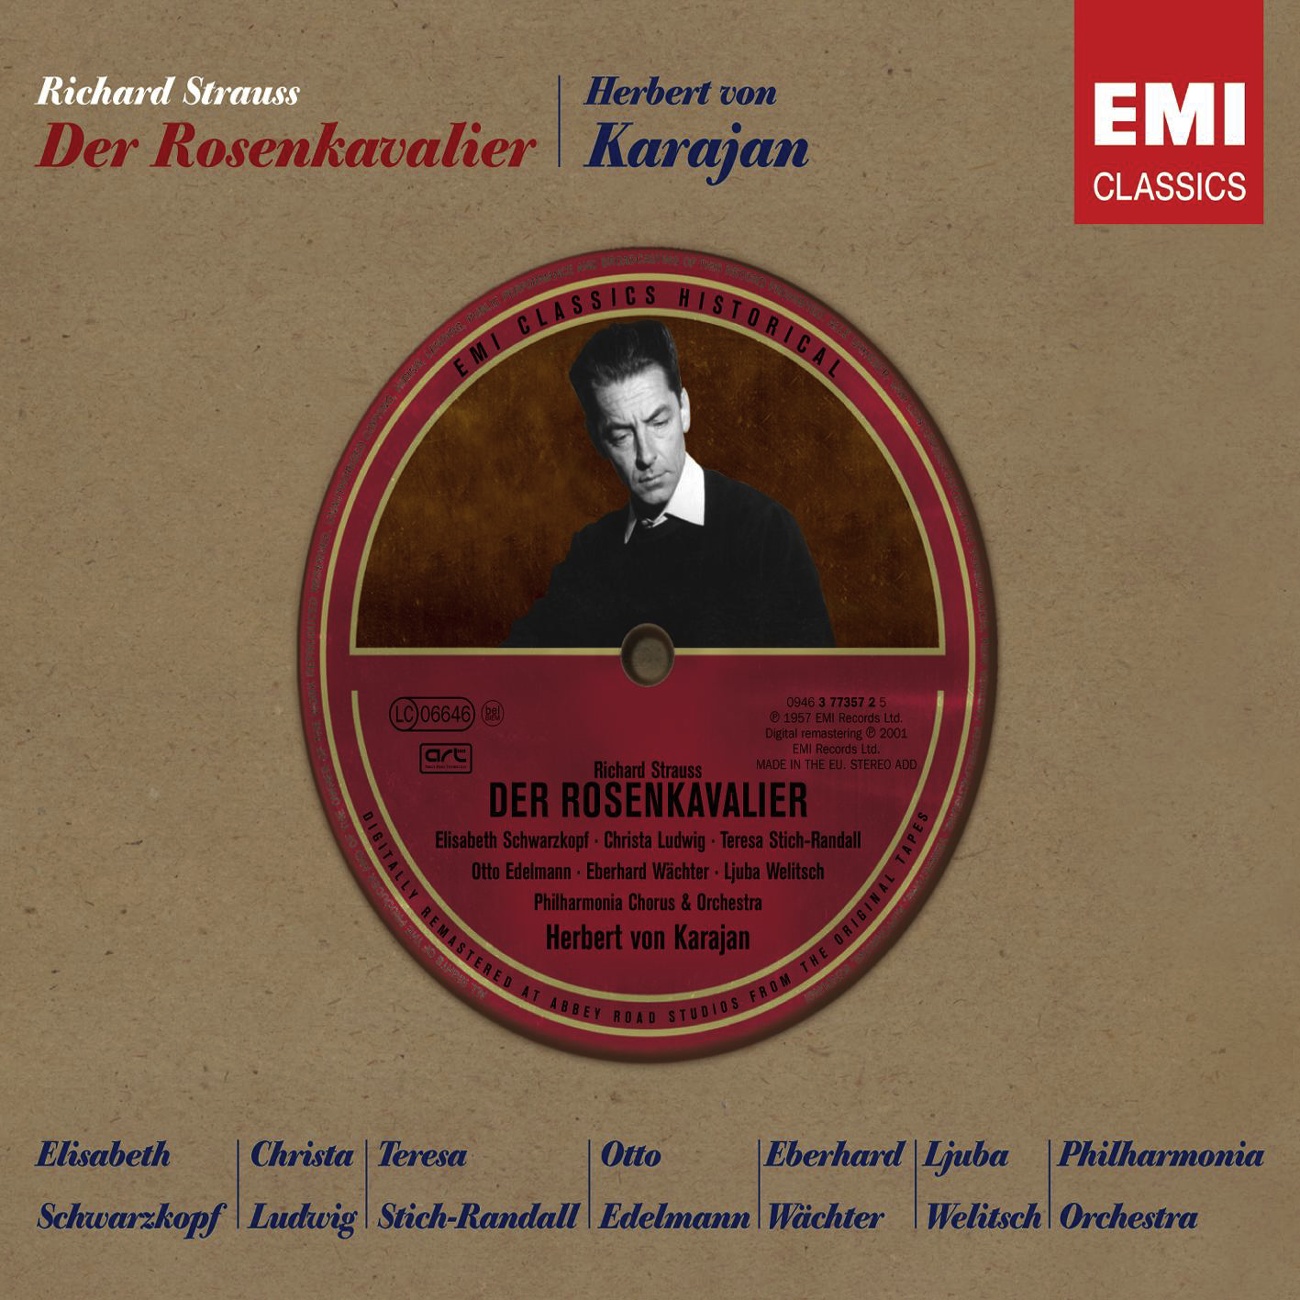 Der Rosenkavalier (2001 Digital Remaster), Act I: Introduction (Orchestra)